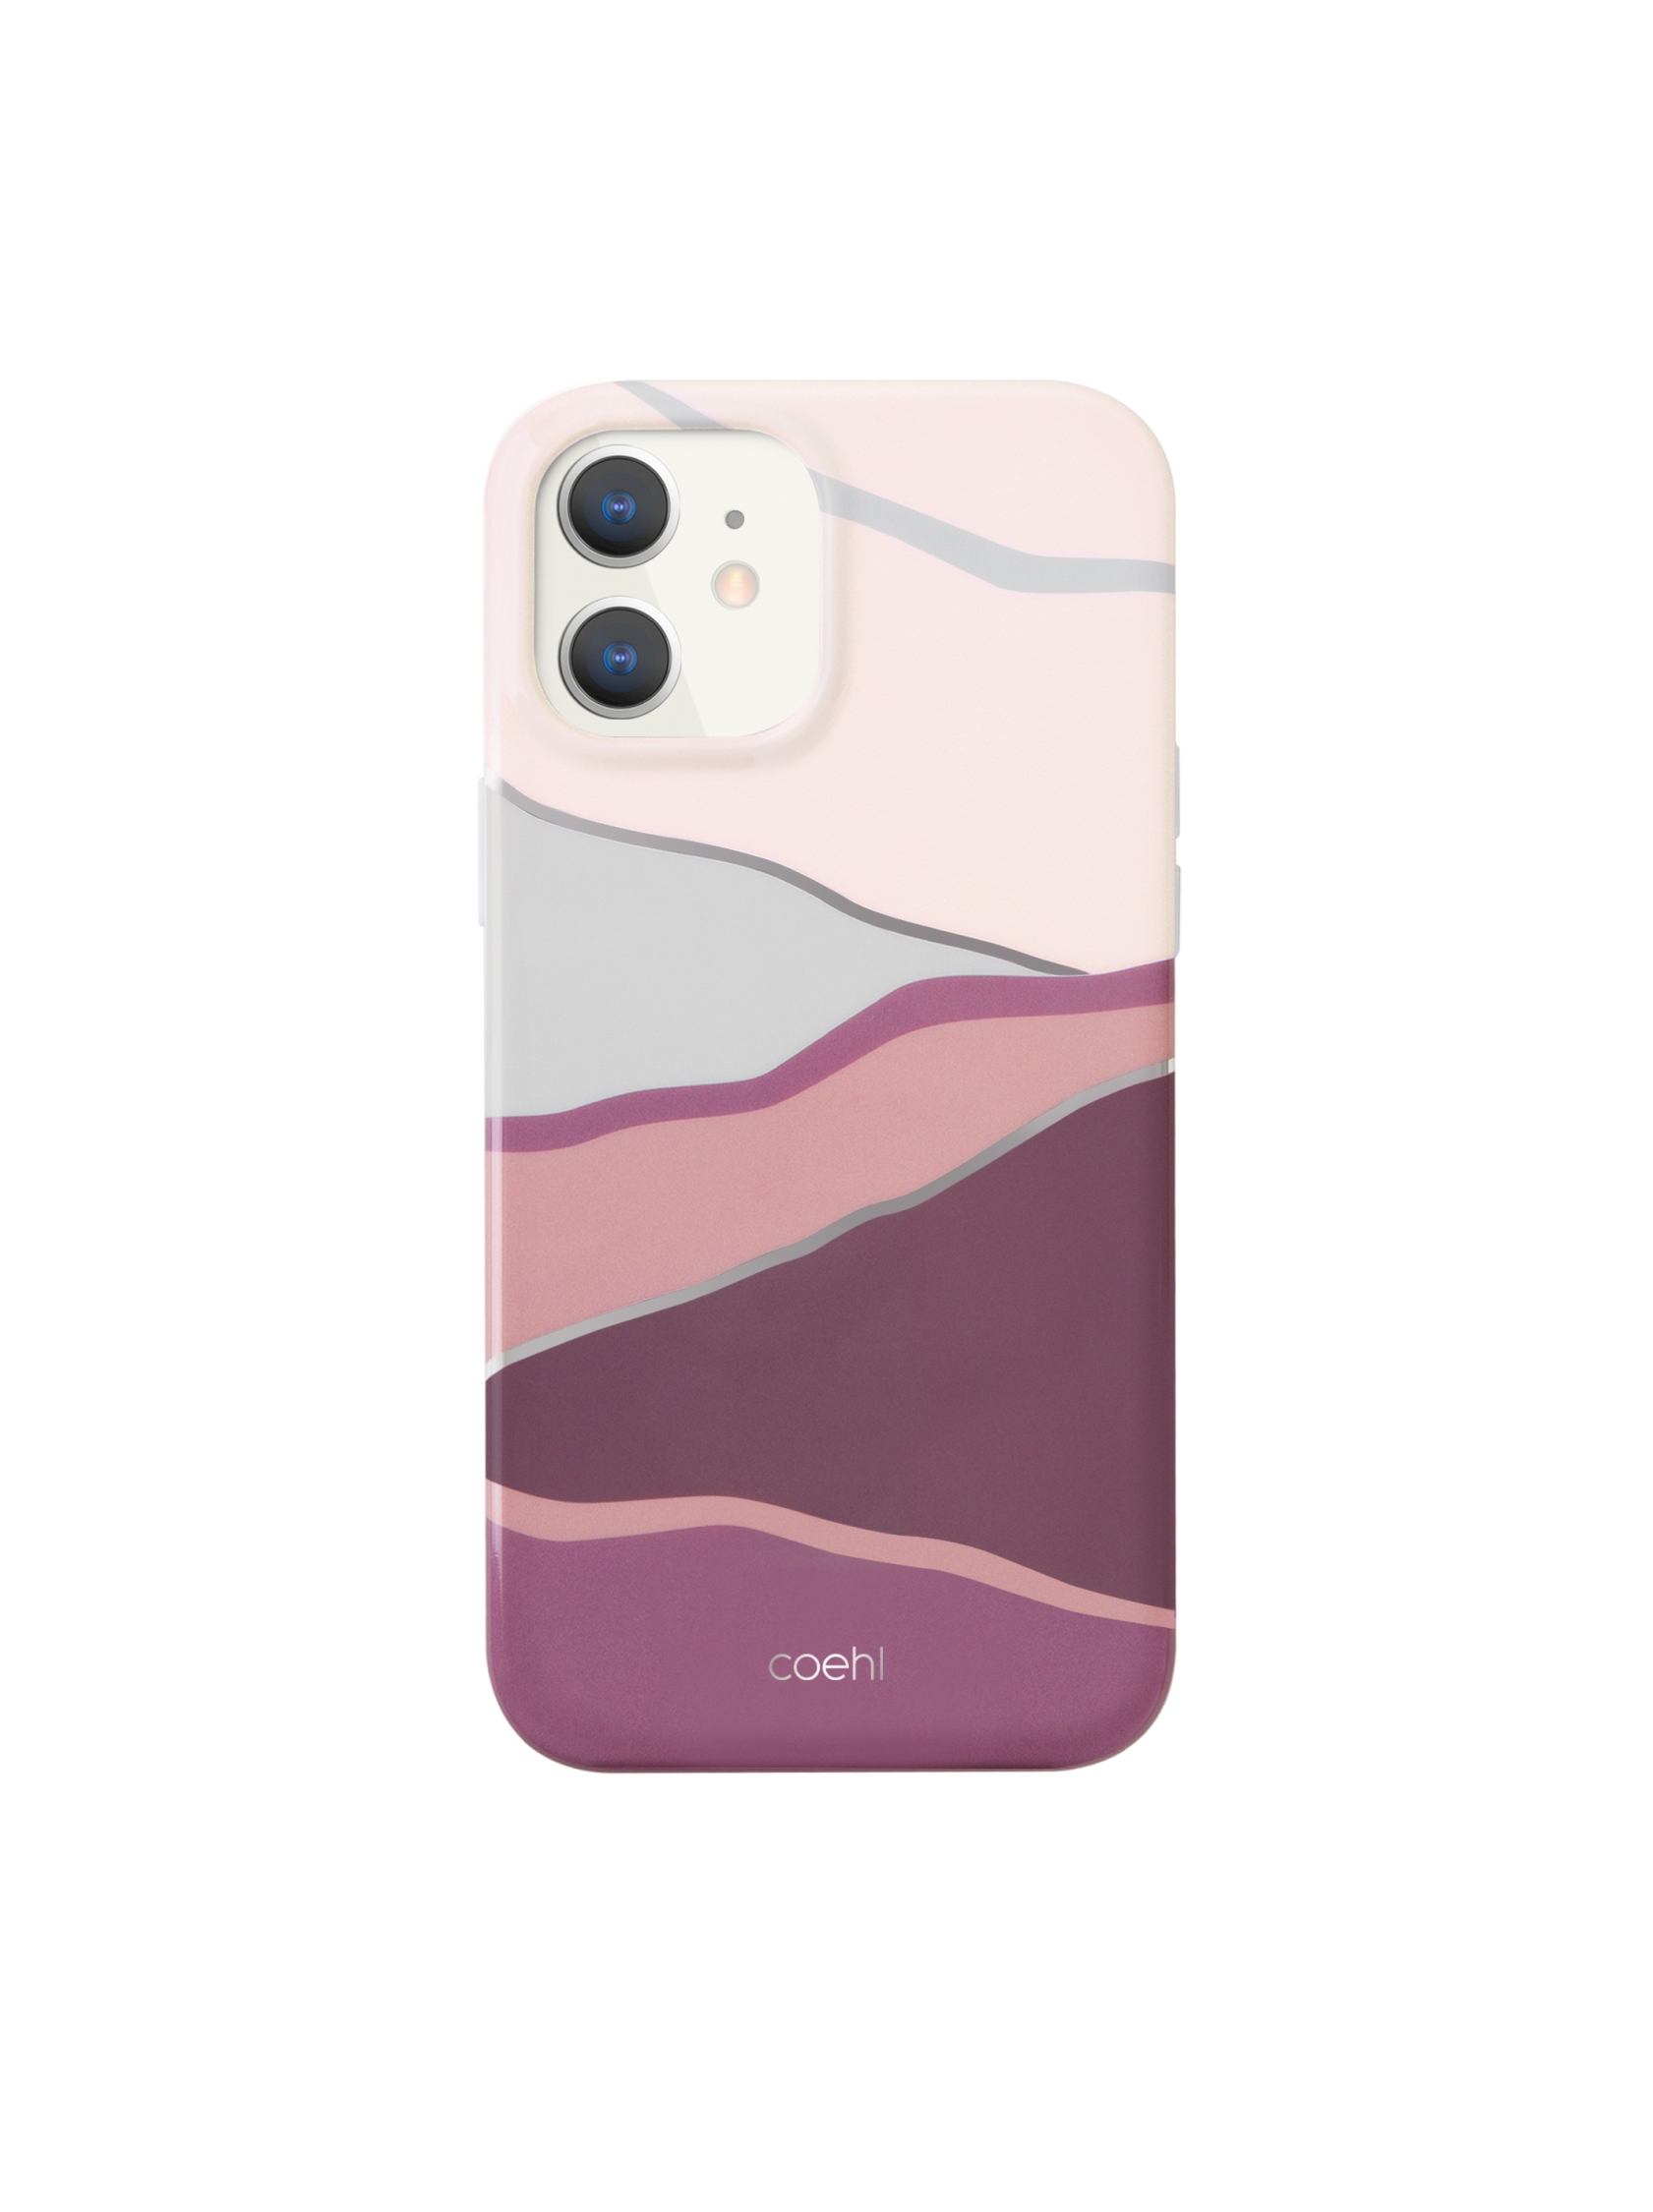 iPhone 12 Mini, case coehl ciel sunset pink, pink